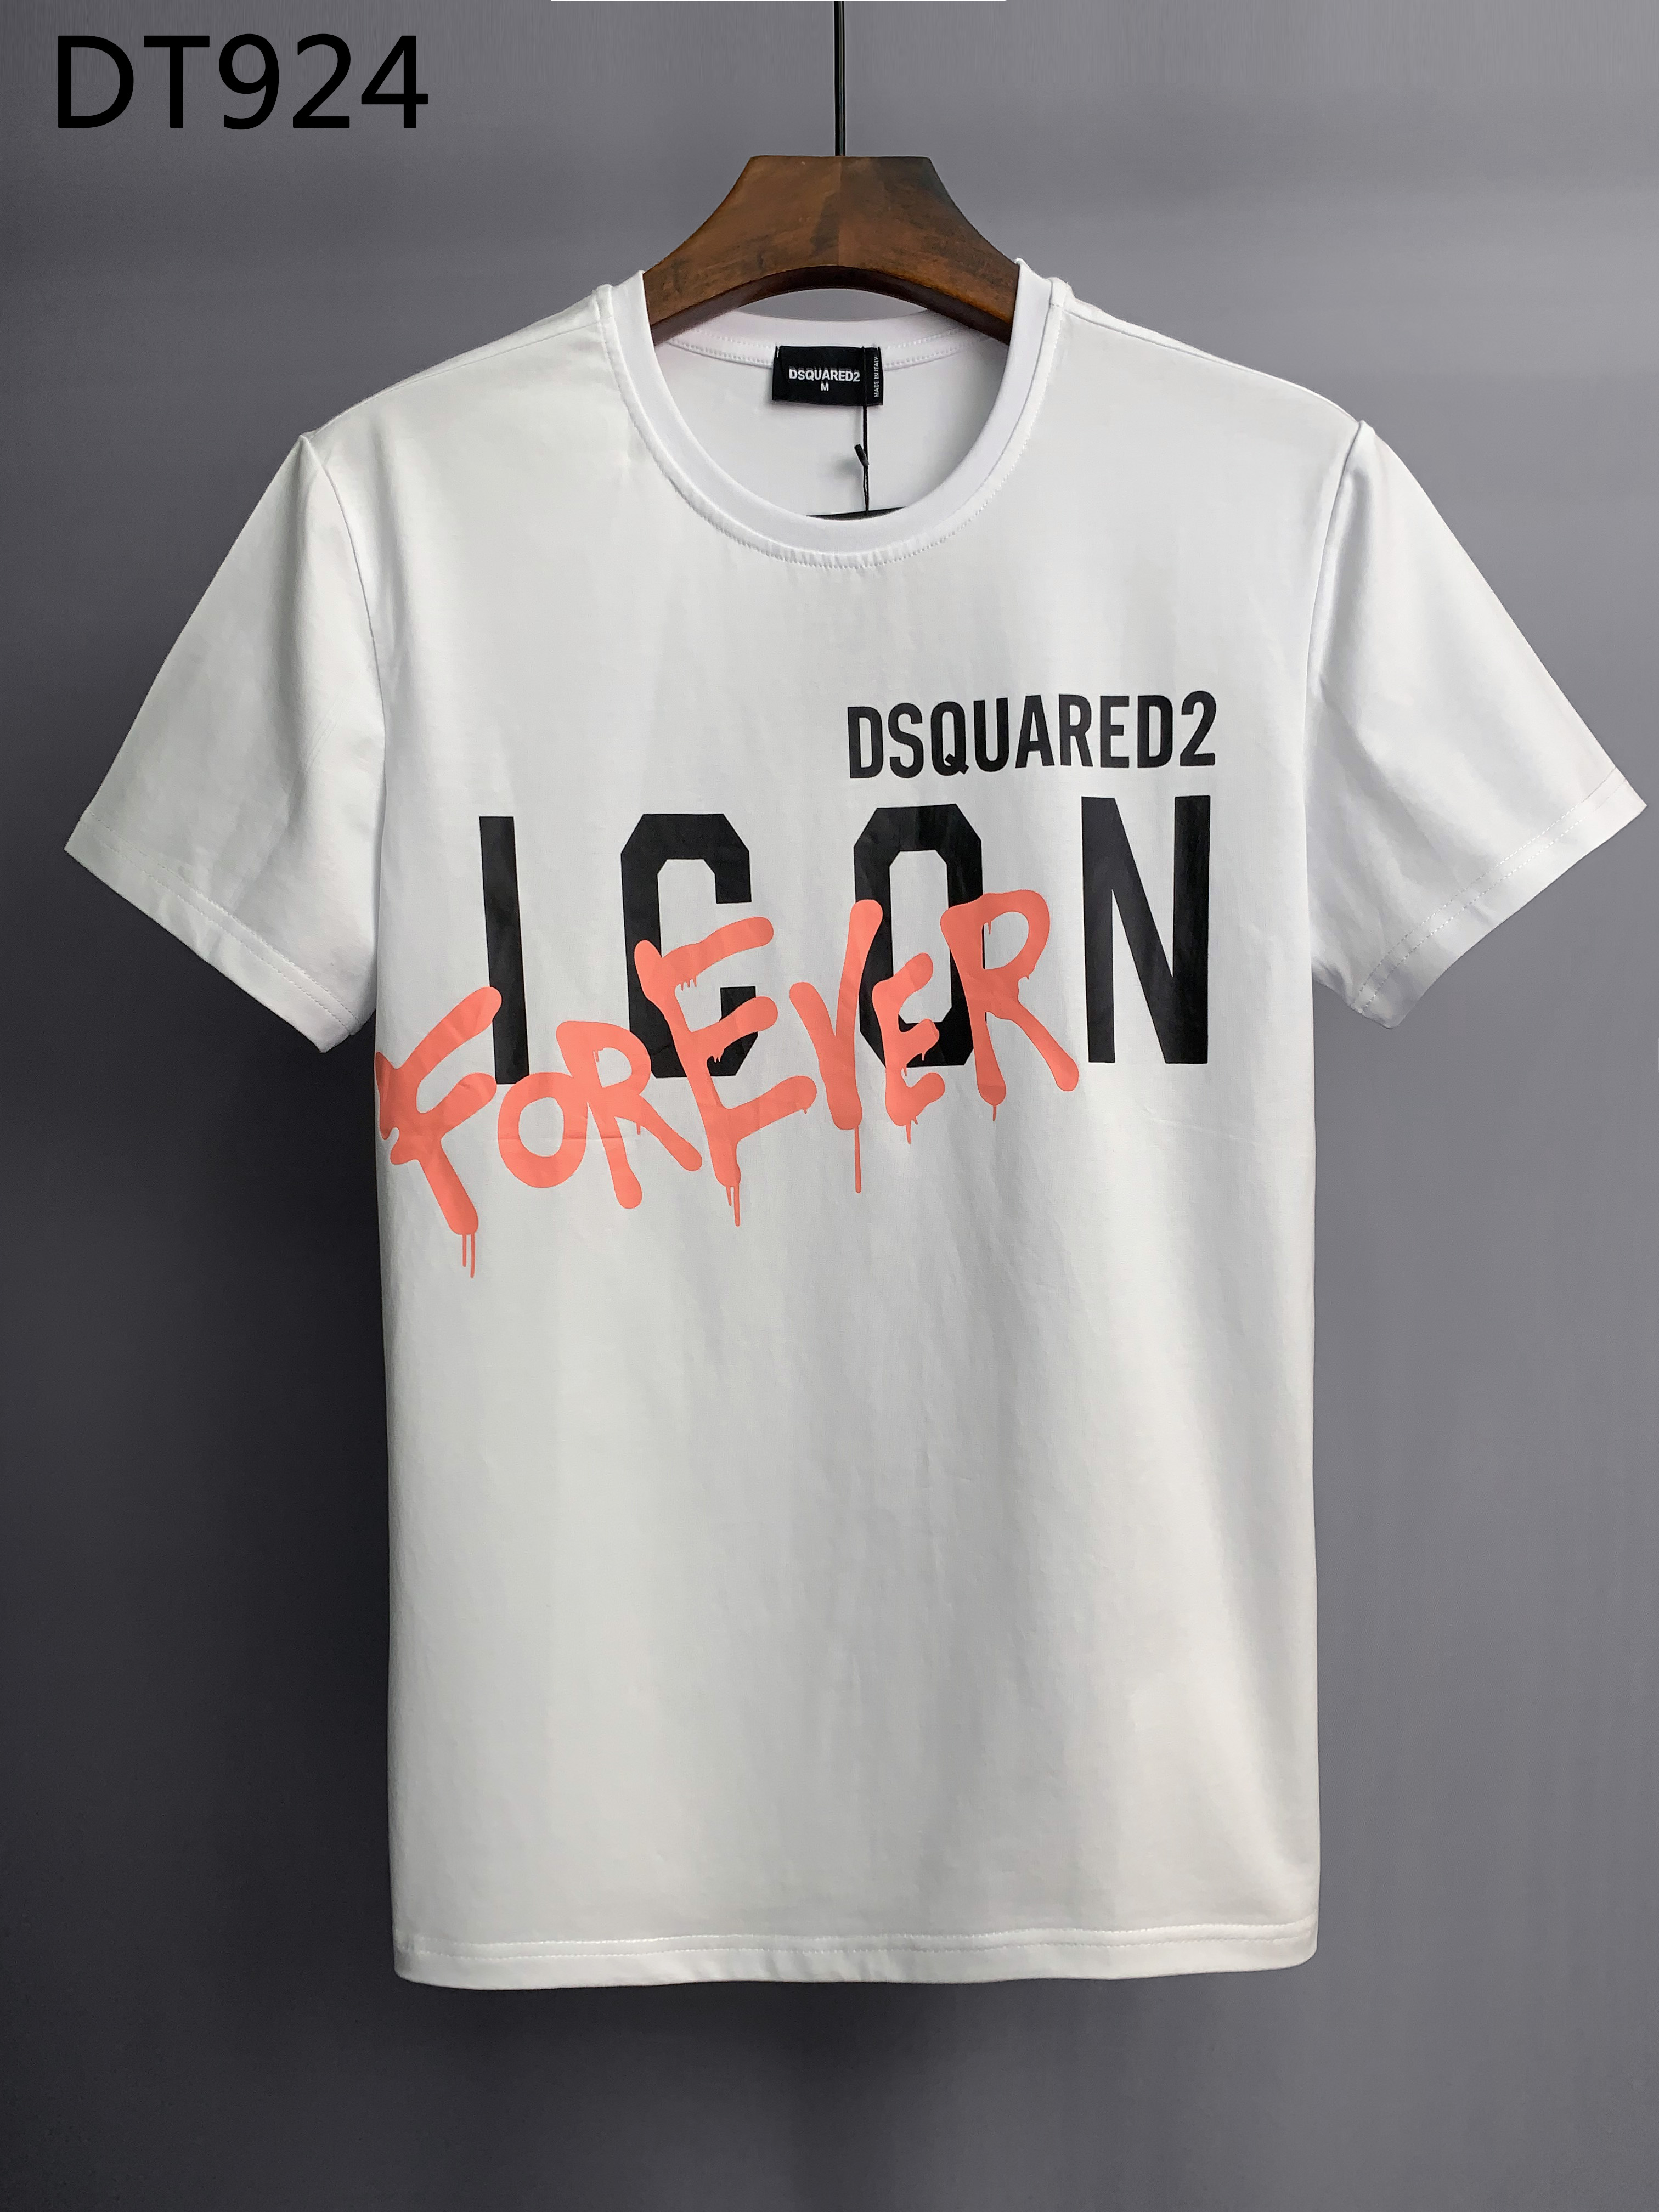 

DSQ2 ICON DSQUARED2 DSQ D2 Mens printed shirts t shirts Brand Classic Fashion Trend for Simple Street Short Sleeve DSQ 924, Darkcyan